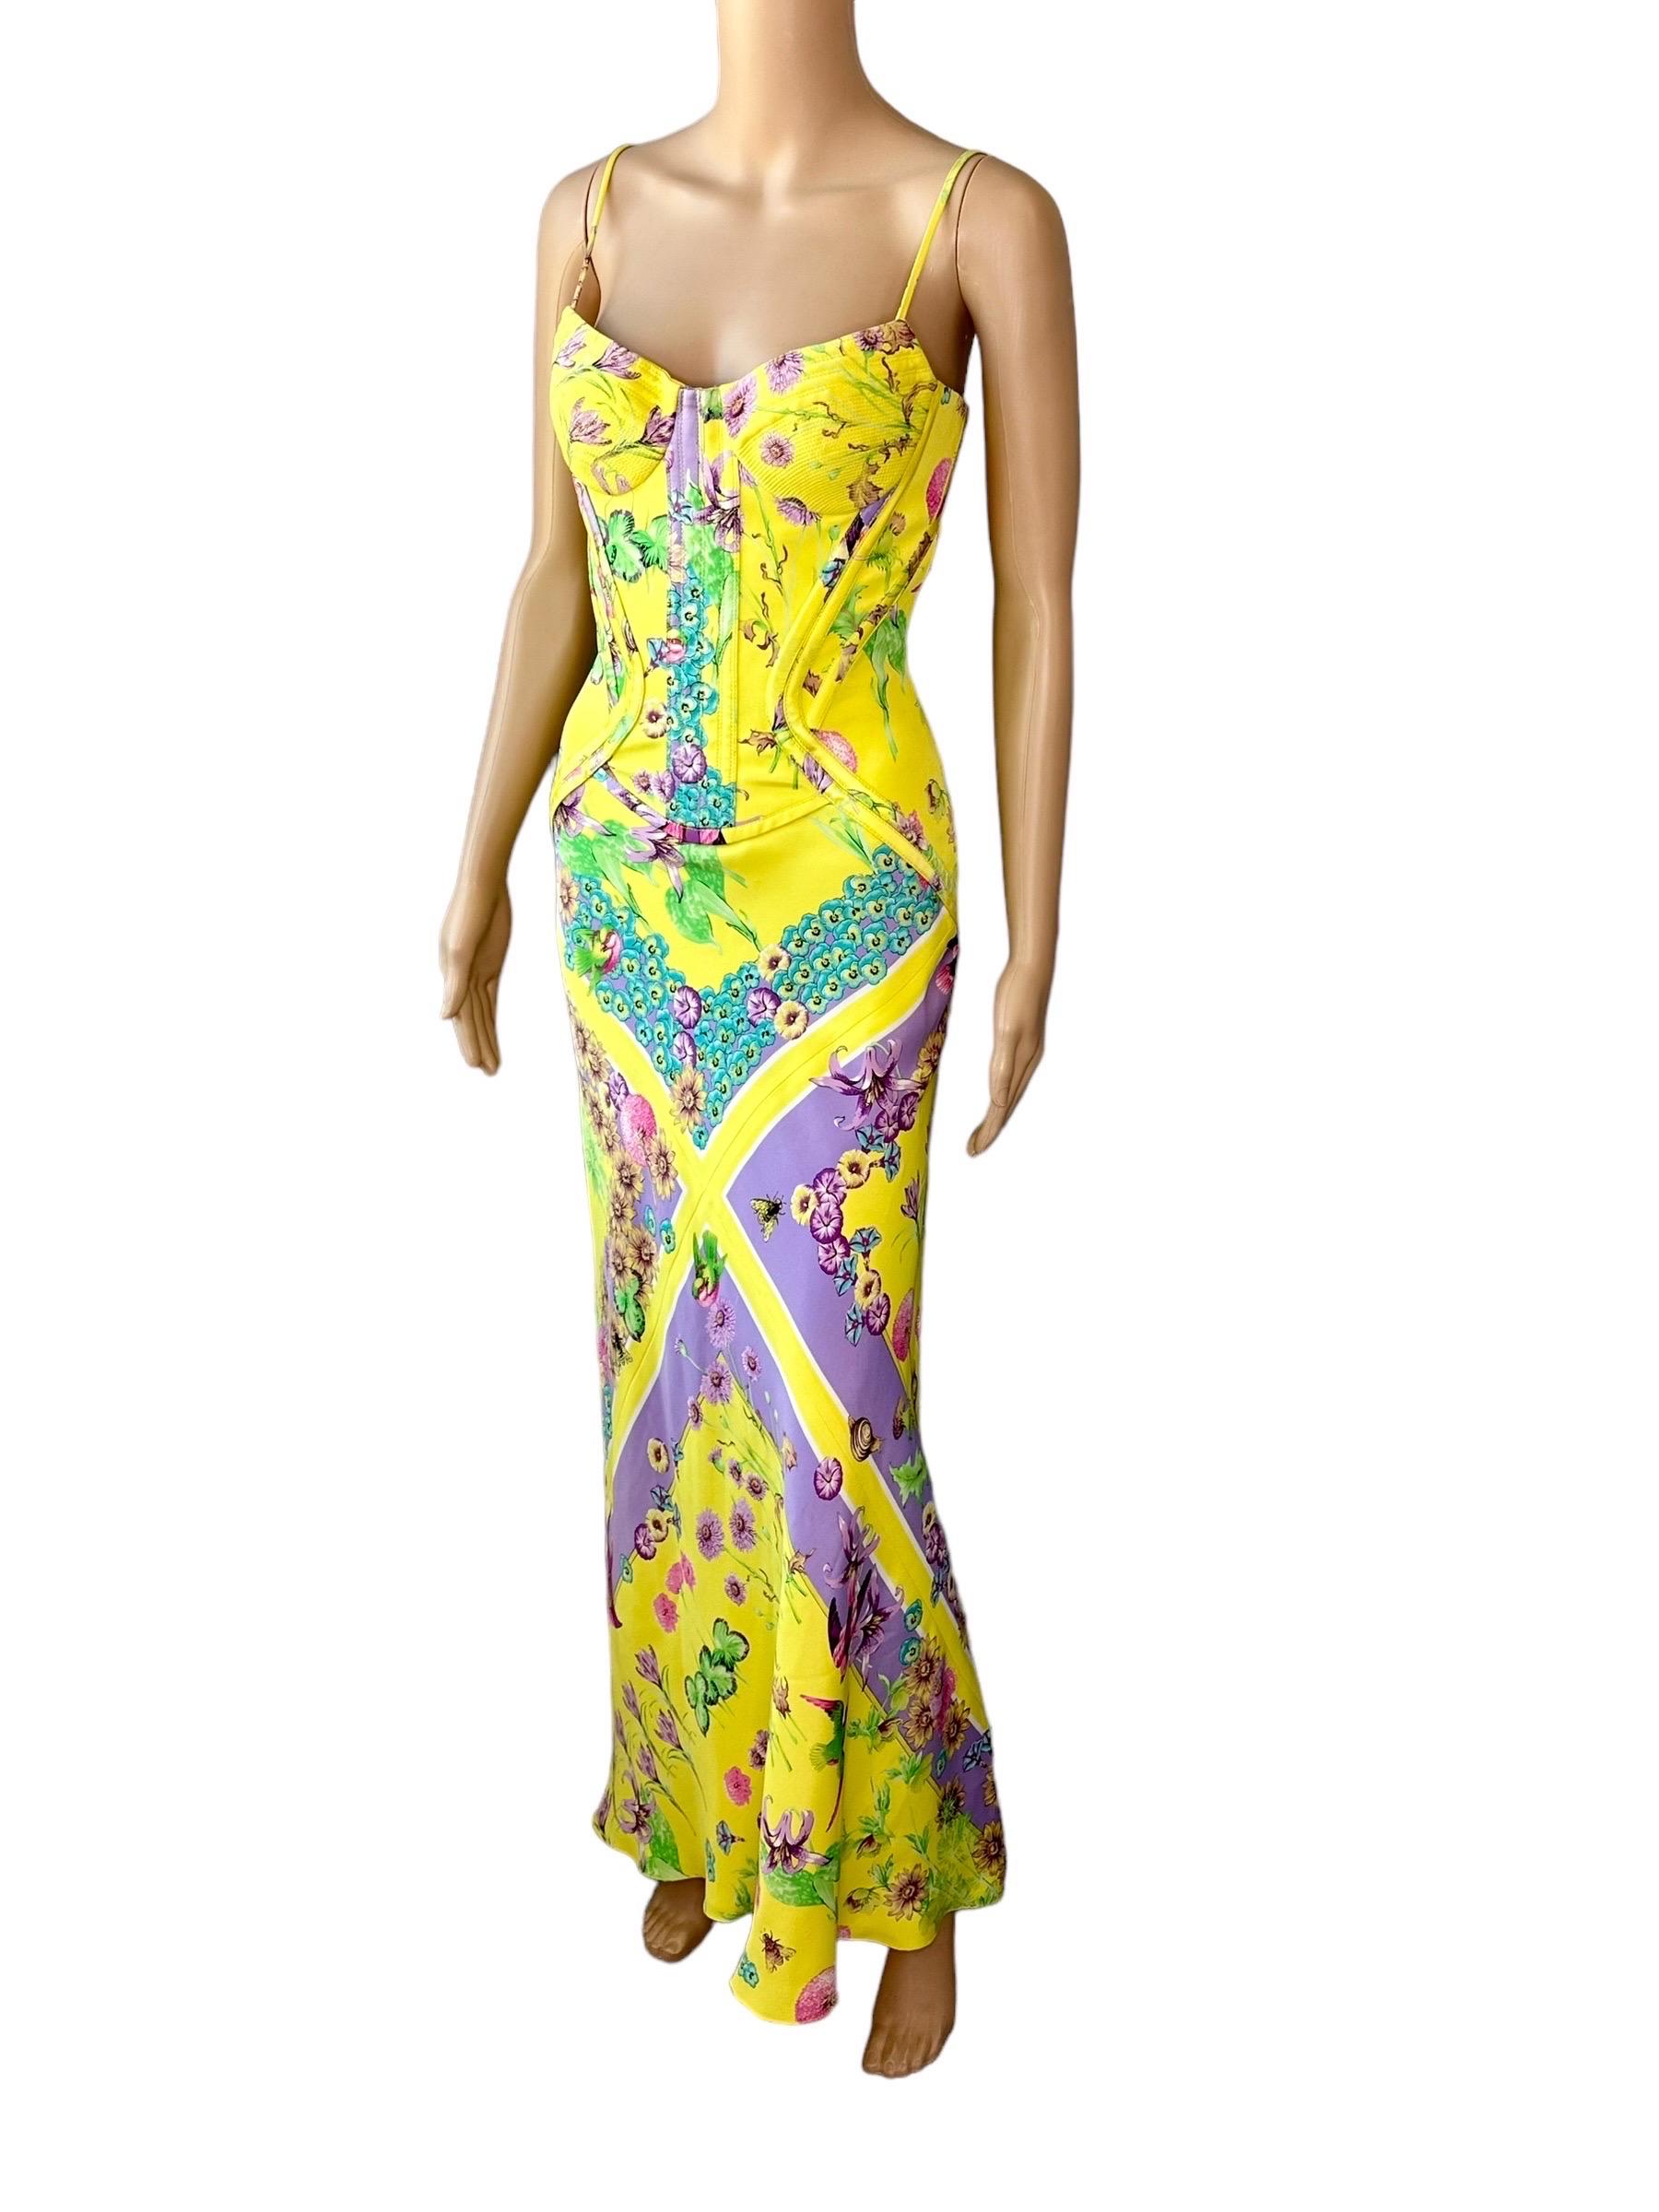 Versace S/S 2006 Bustier Corset Floral Print Evening Dress Gown For Sale 7